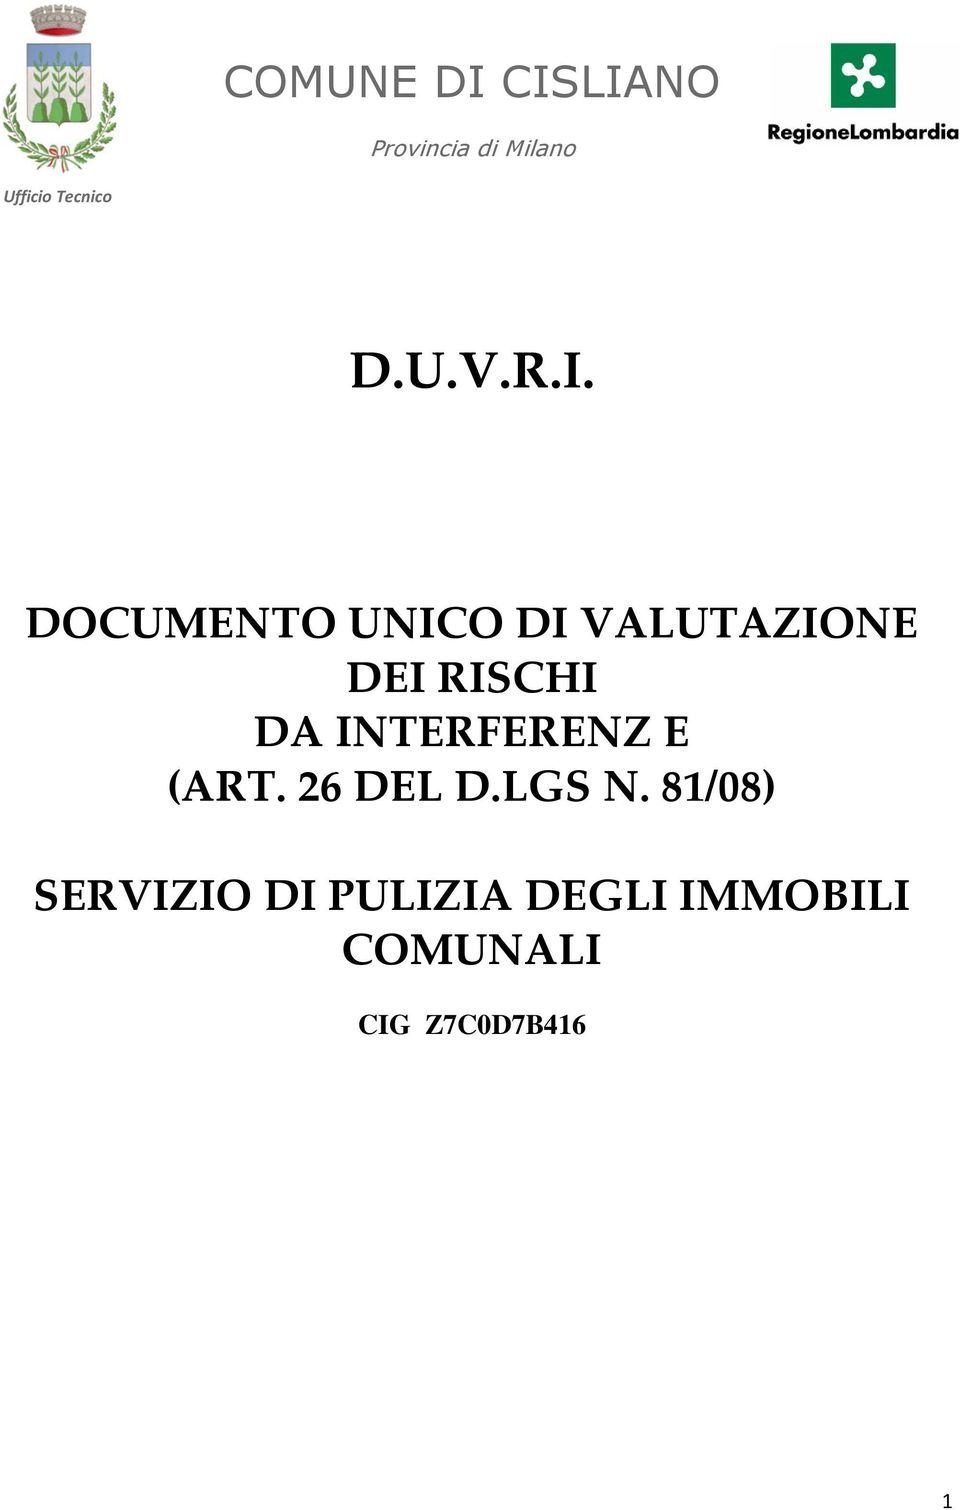 RISCHI DA INTERFERENZ E (ART. 26 DEL D.